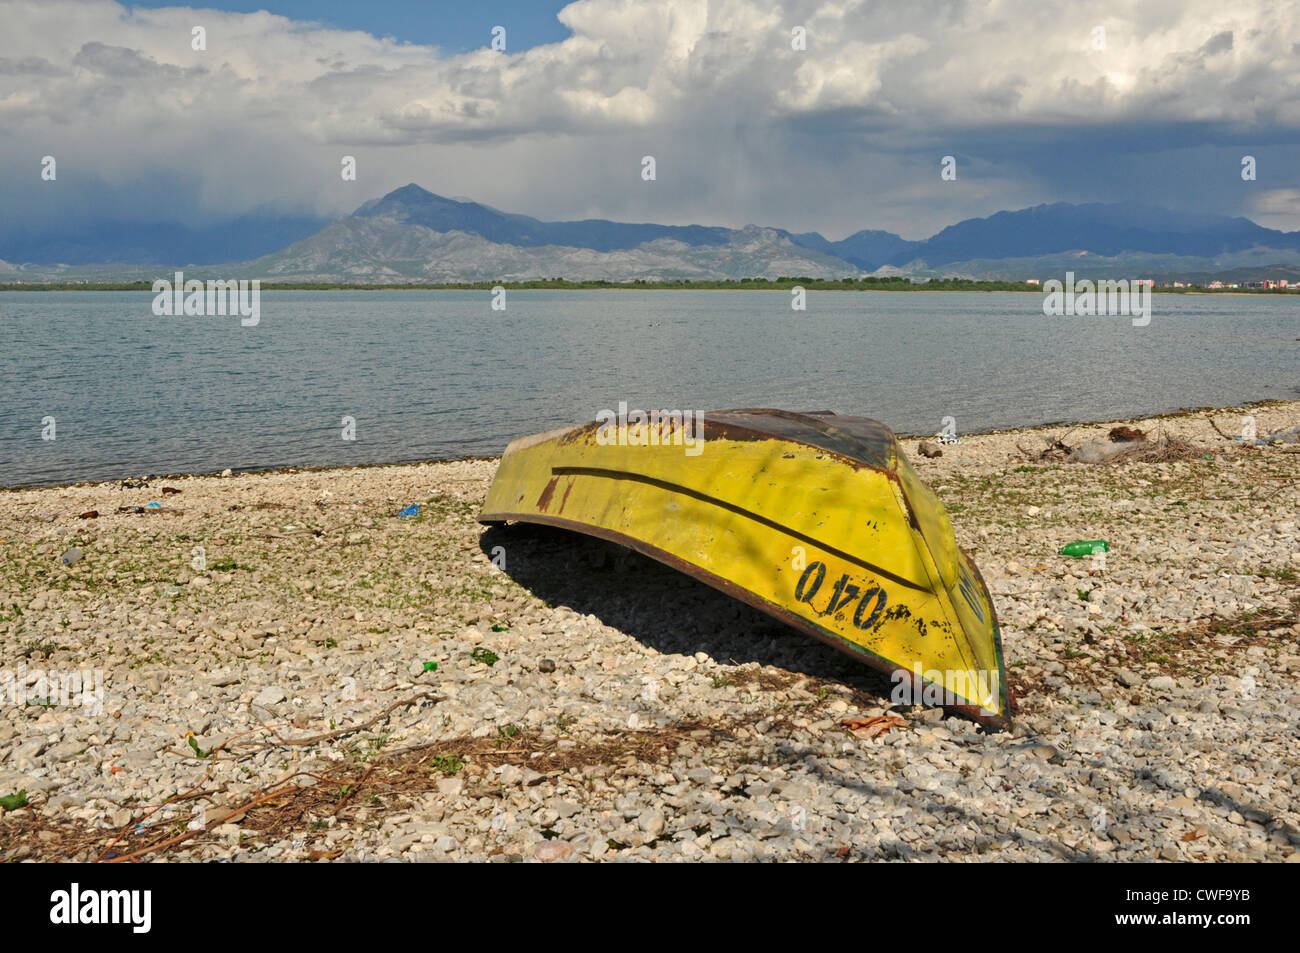 EUROPE, Albania, Lake Shkodra (Skadar Lake) beauty spot, view over lake with fishing boats at front Stock Photo